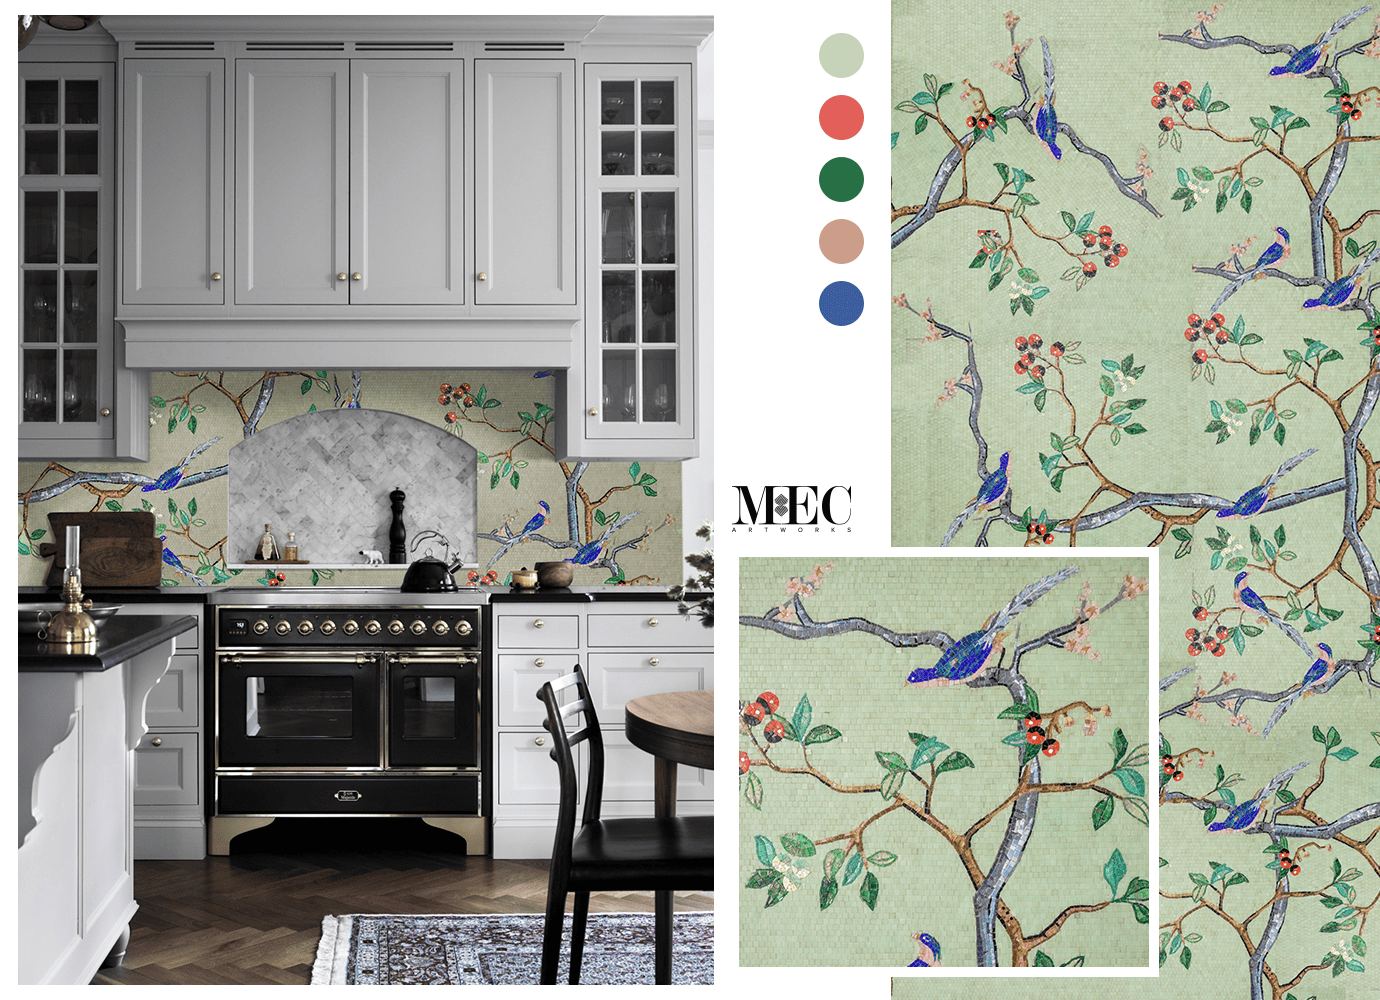 Chinoiserie Sage wall mosaic artwork customized for a kitchen backsplash